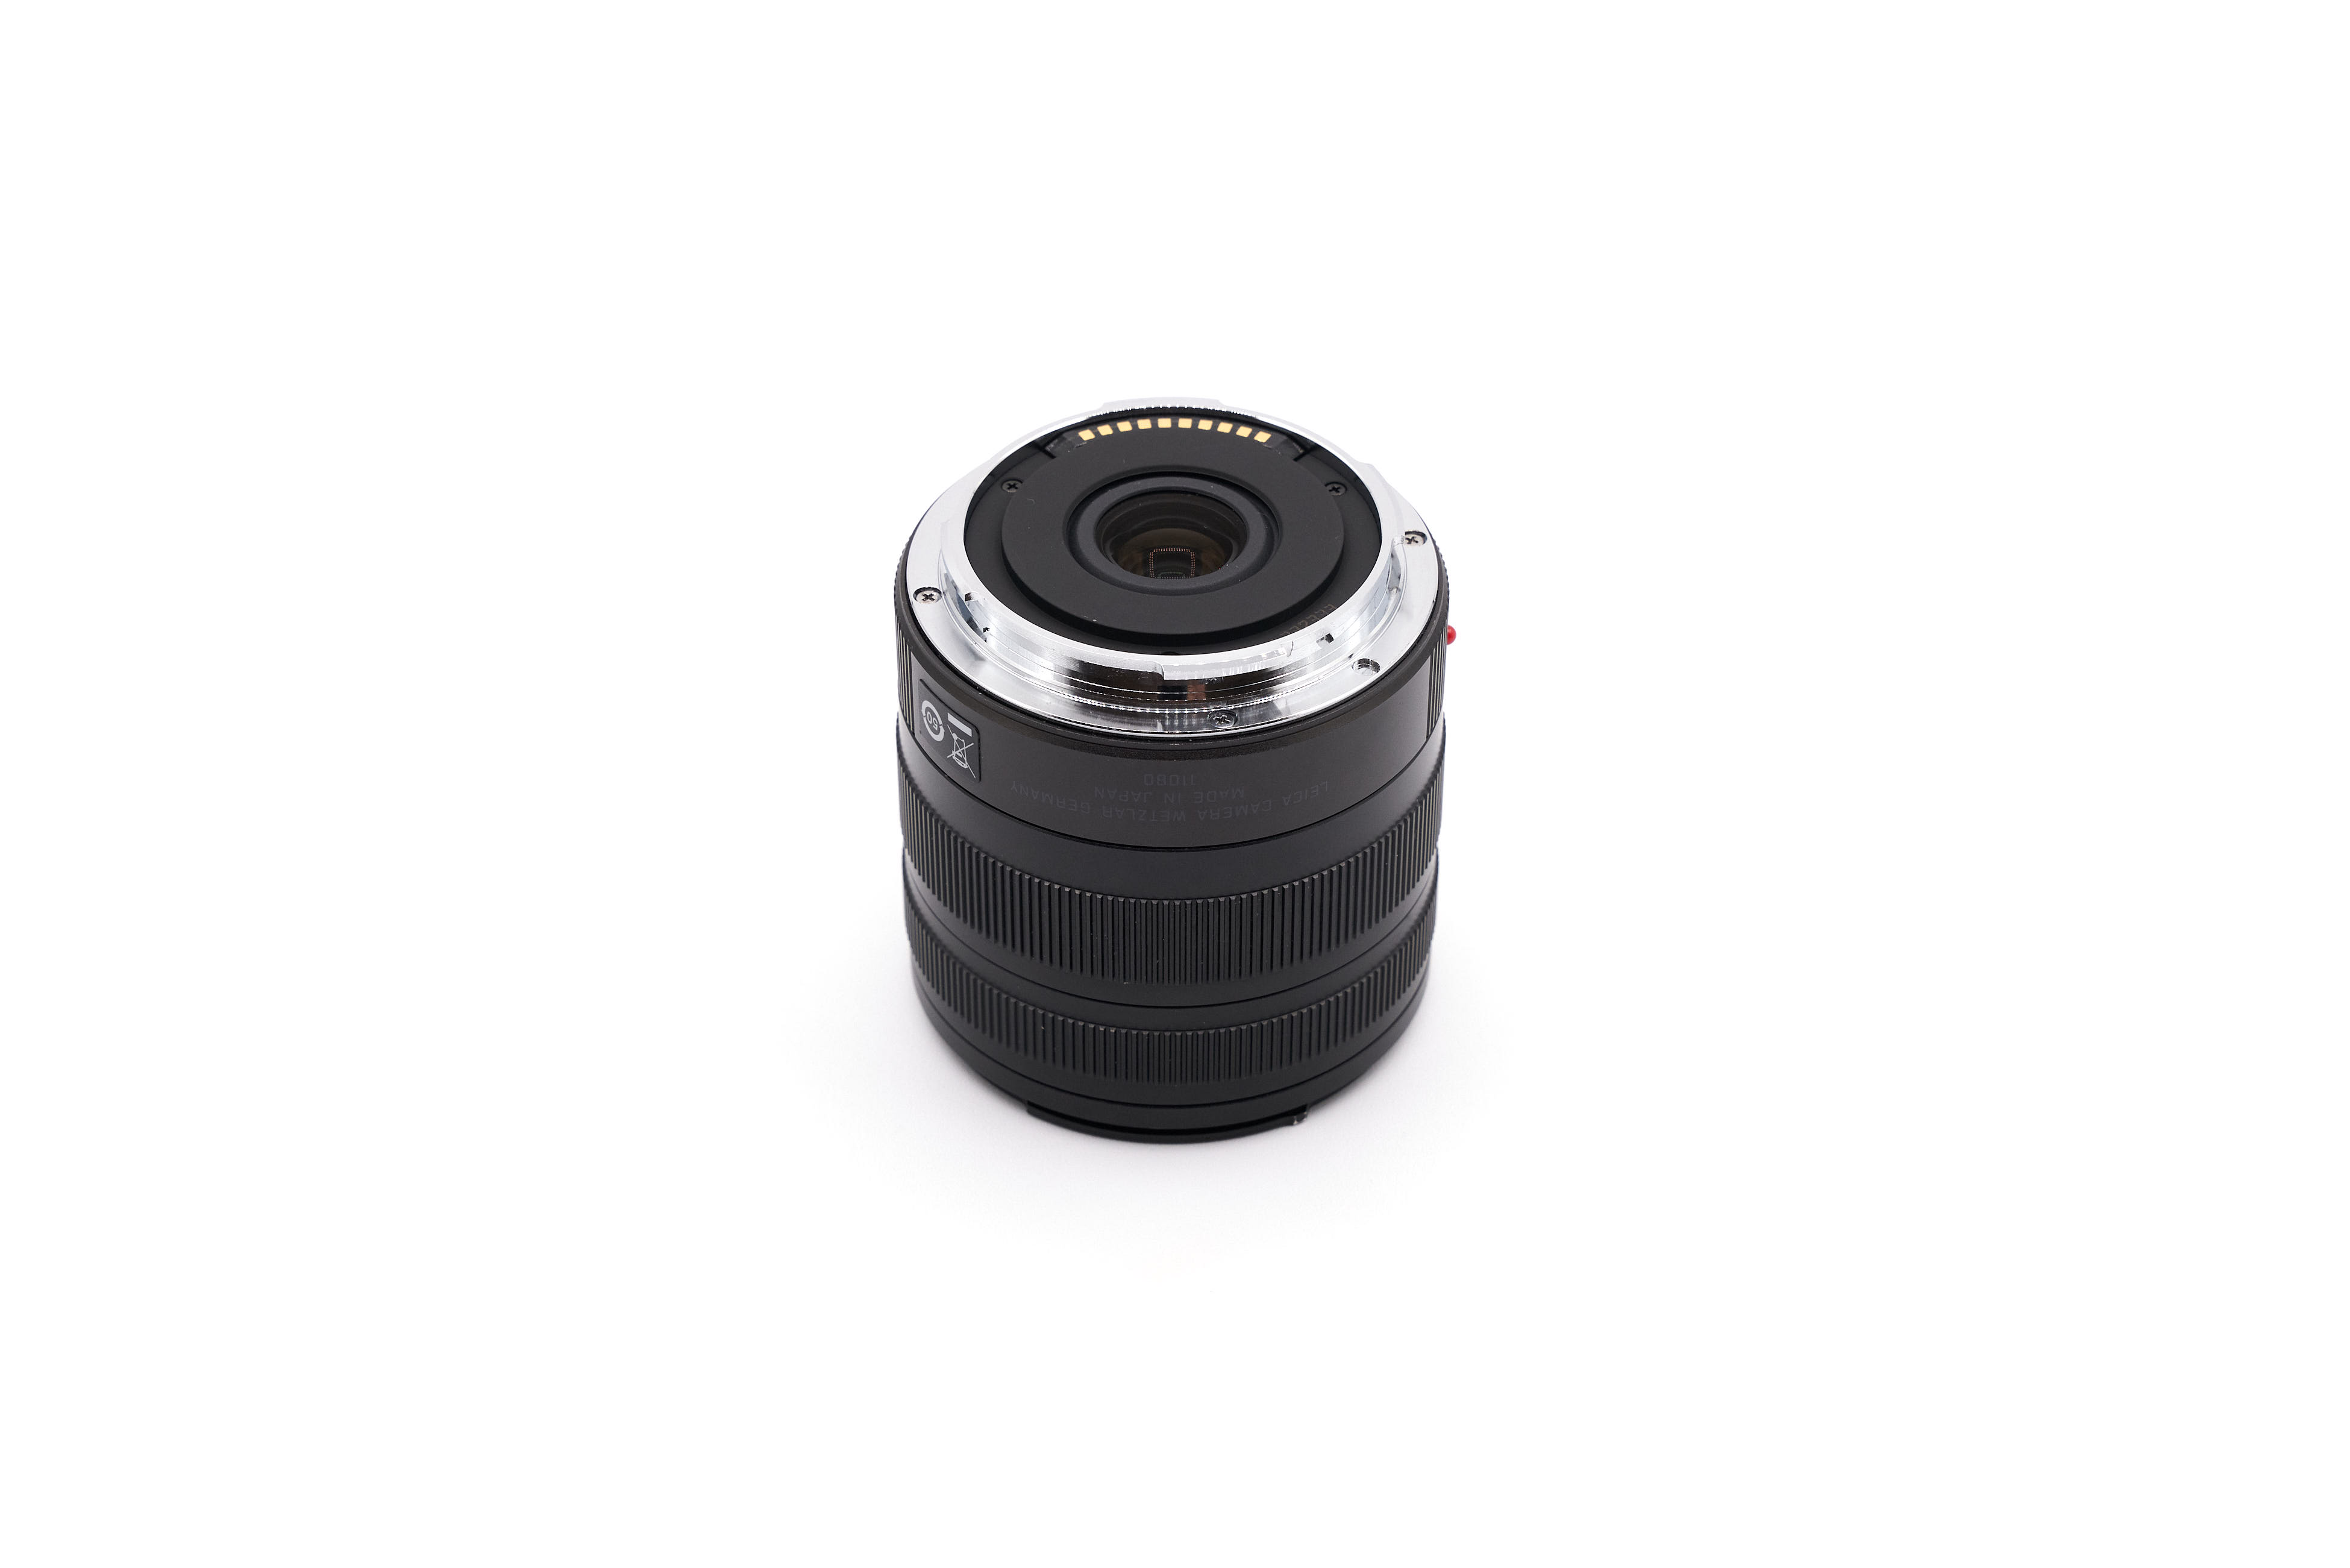 Leica Vario-Elmar-TL 18-56mm f/3.5-5.6 11080